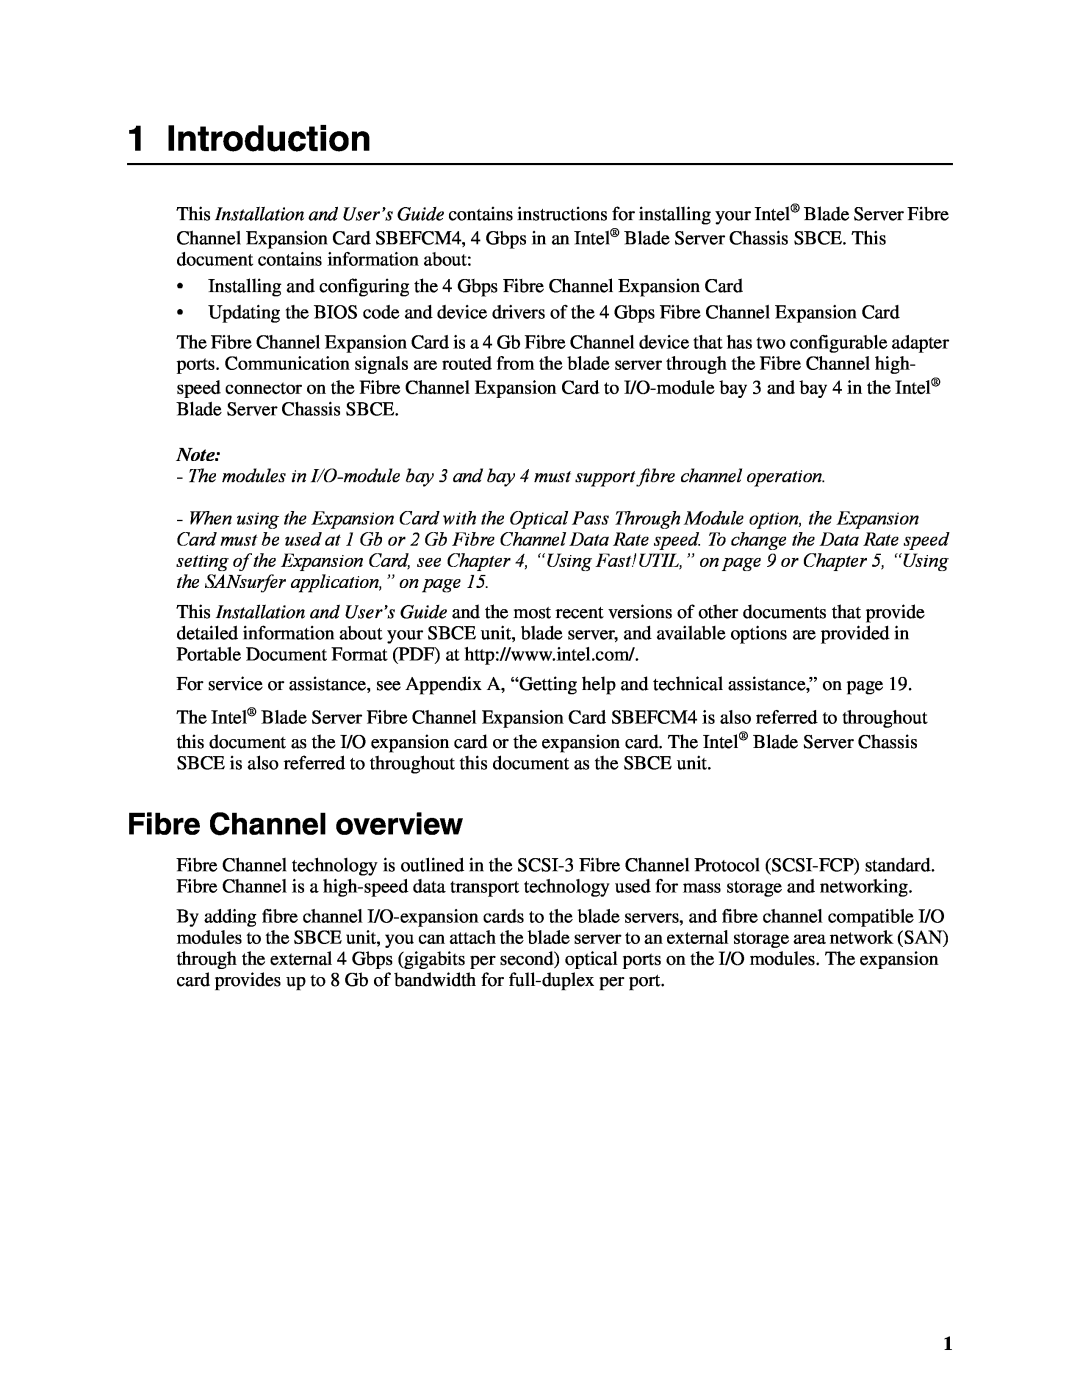 Intel SEBFCM4 manual Introduction, Fibre Channel overview 